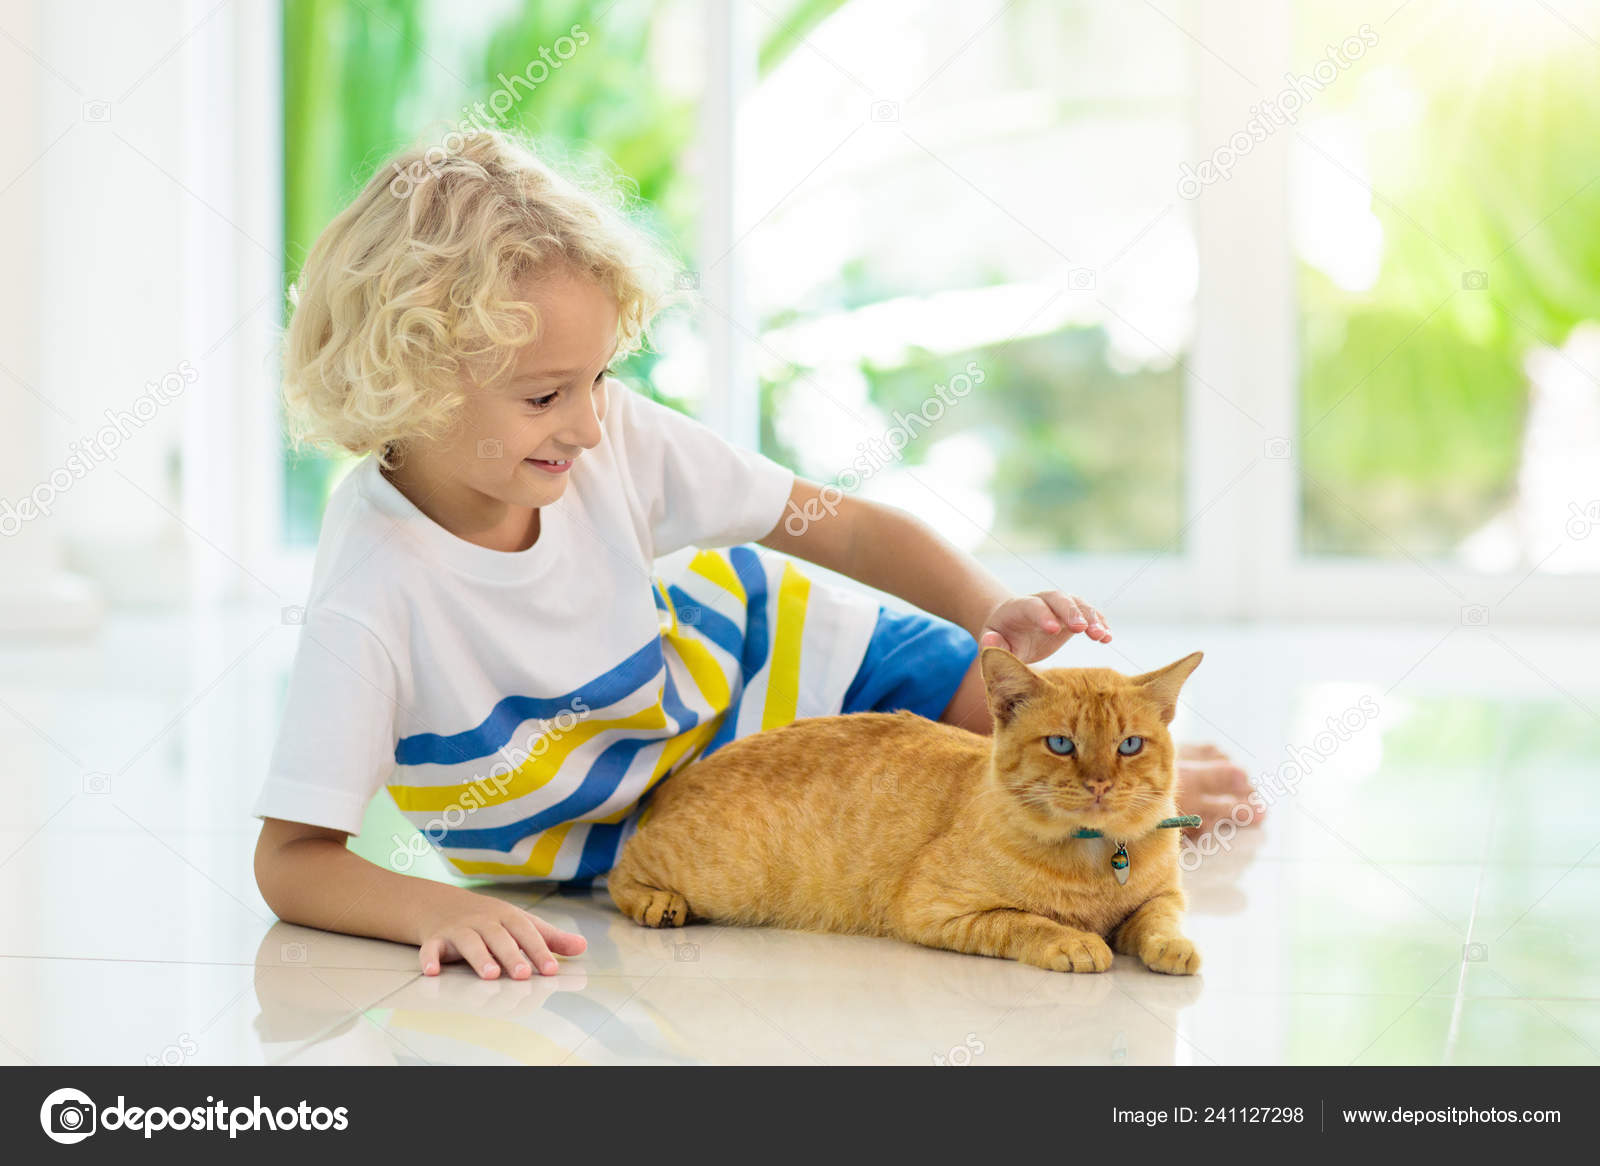 Personas alimentando gatos fotos de stock, imágenes de Personas están alimentando gatos sin royalties | Depositphotos